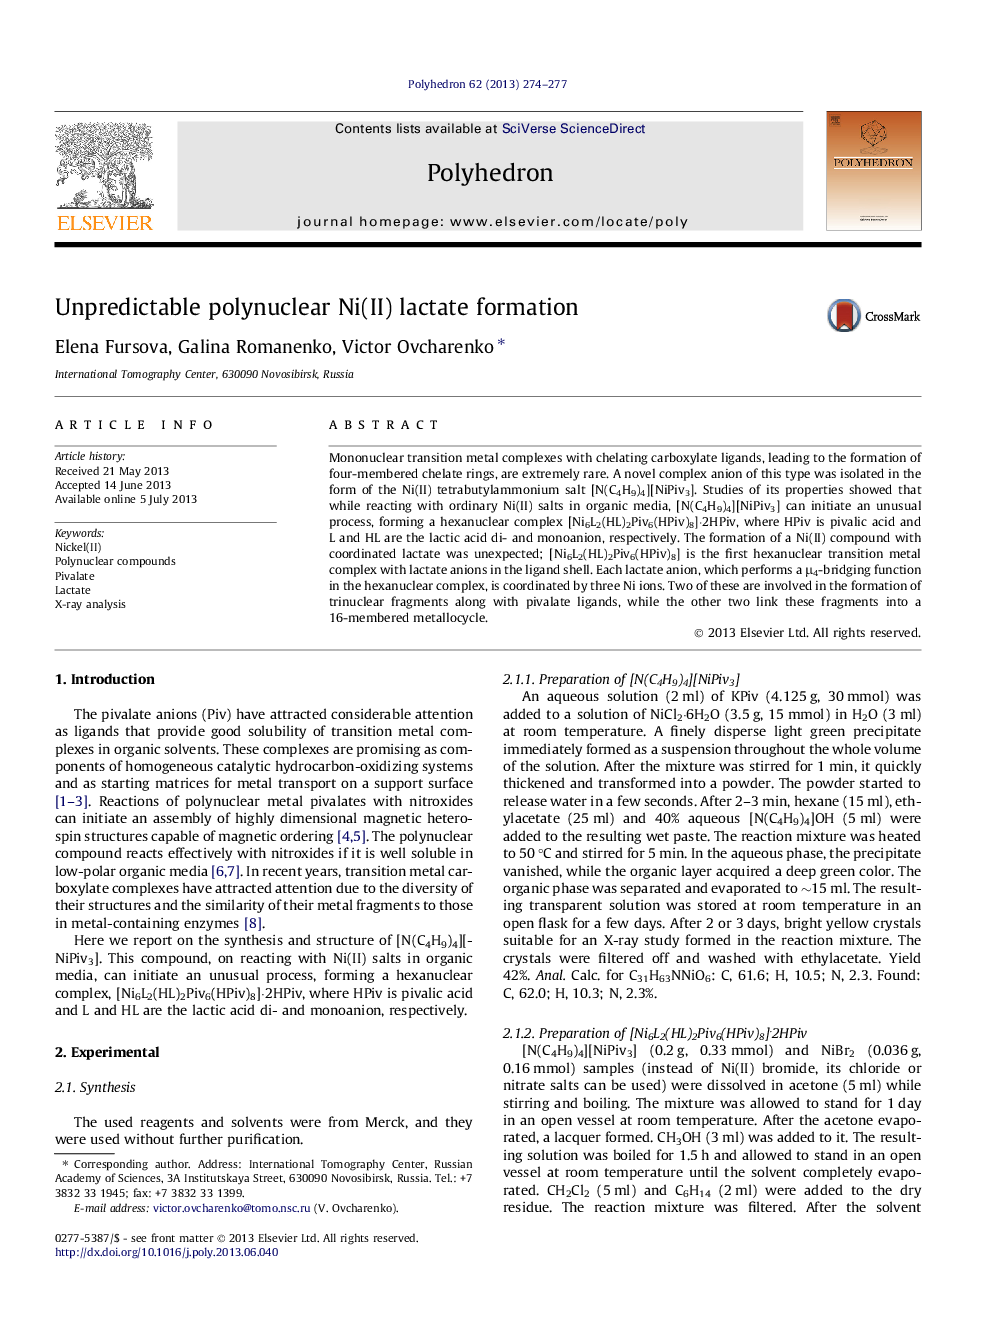 Unpredictable polynuclear Ni(II) lactate formation